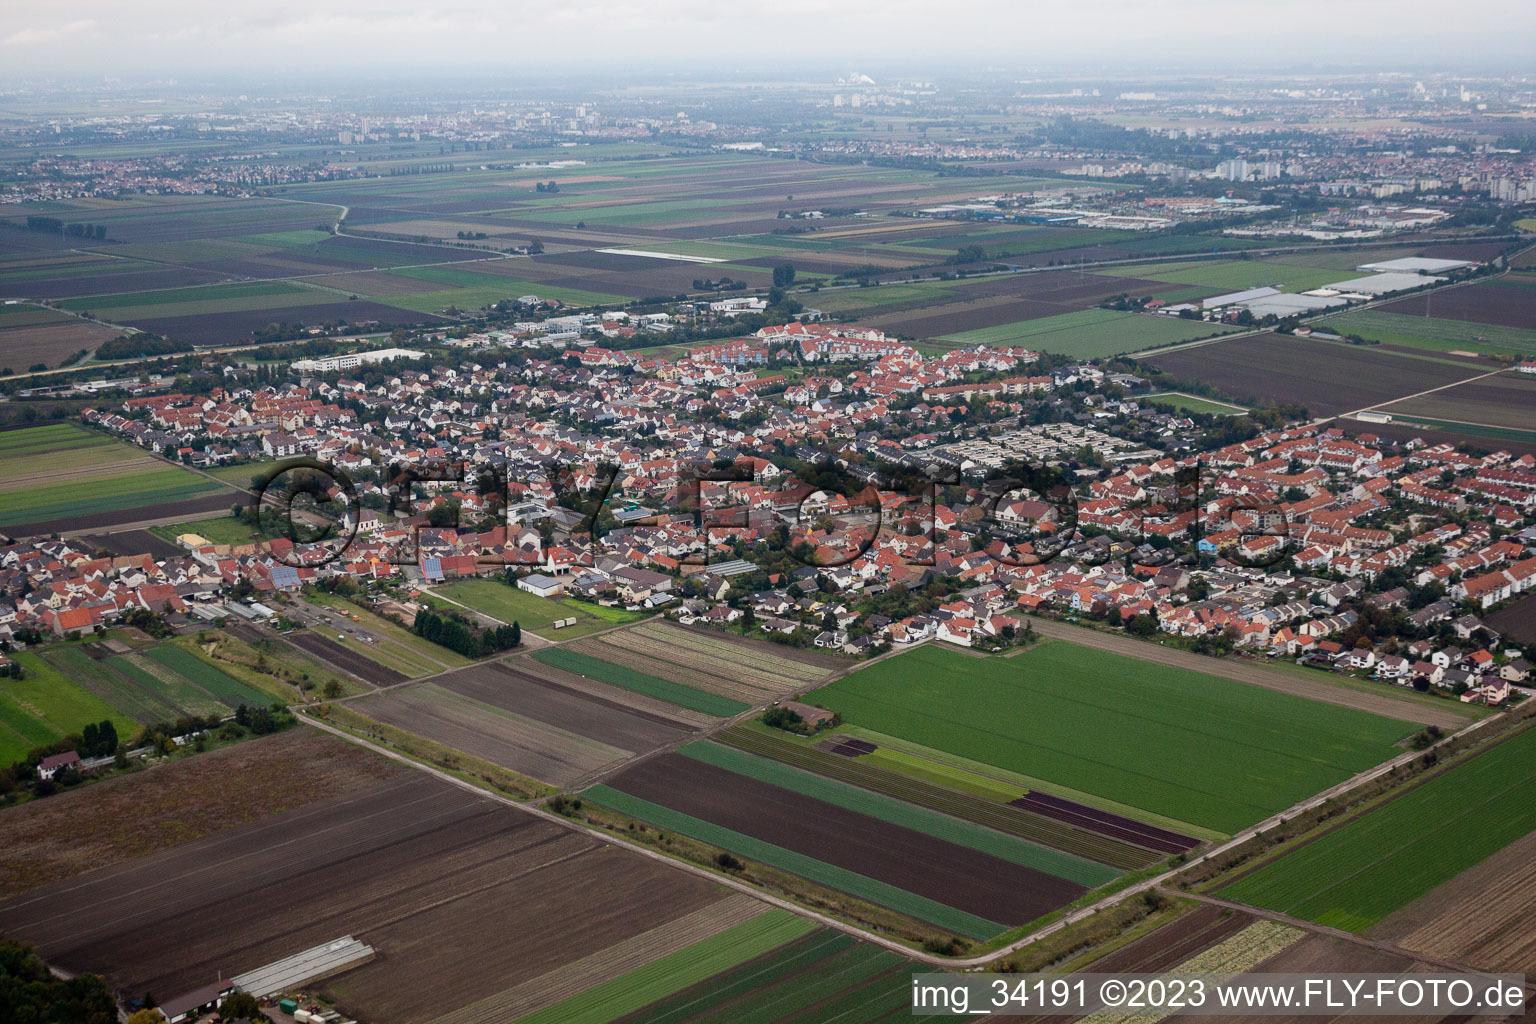 Aerial view of District Ruchheim in Ludwigshafen am Rhein in the state Rhineland-Palatinate, Germany